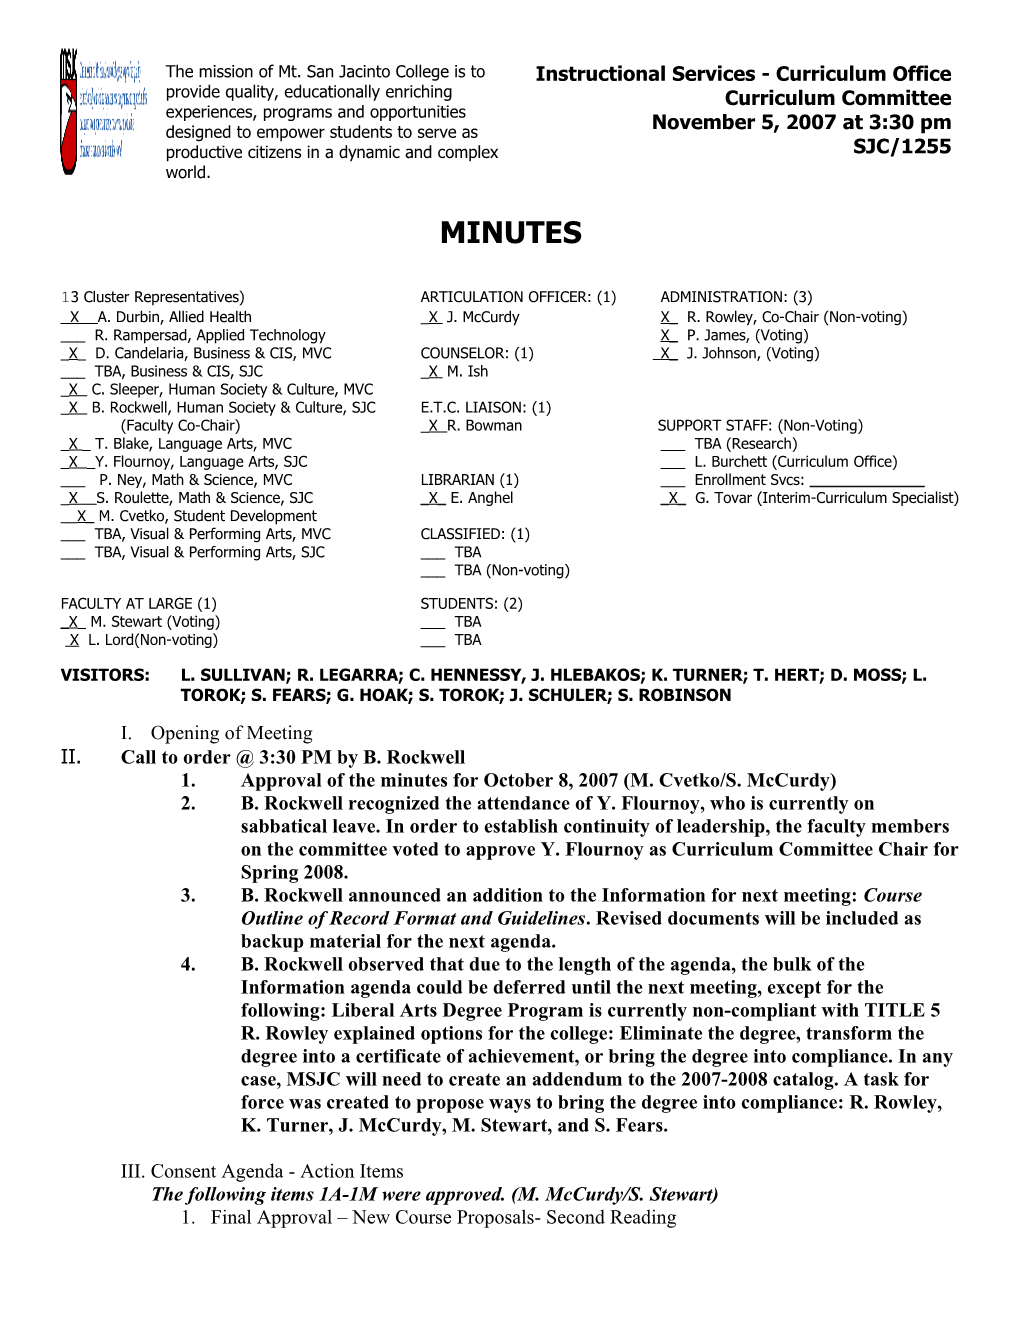 Curriculum Committee Meeting Minutes NOV 5 2007